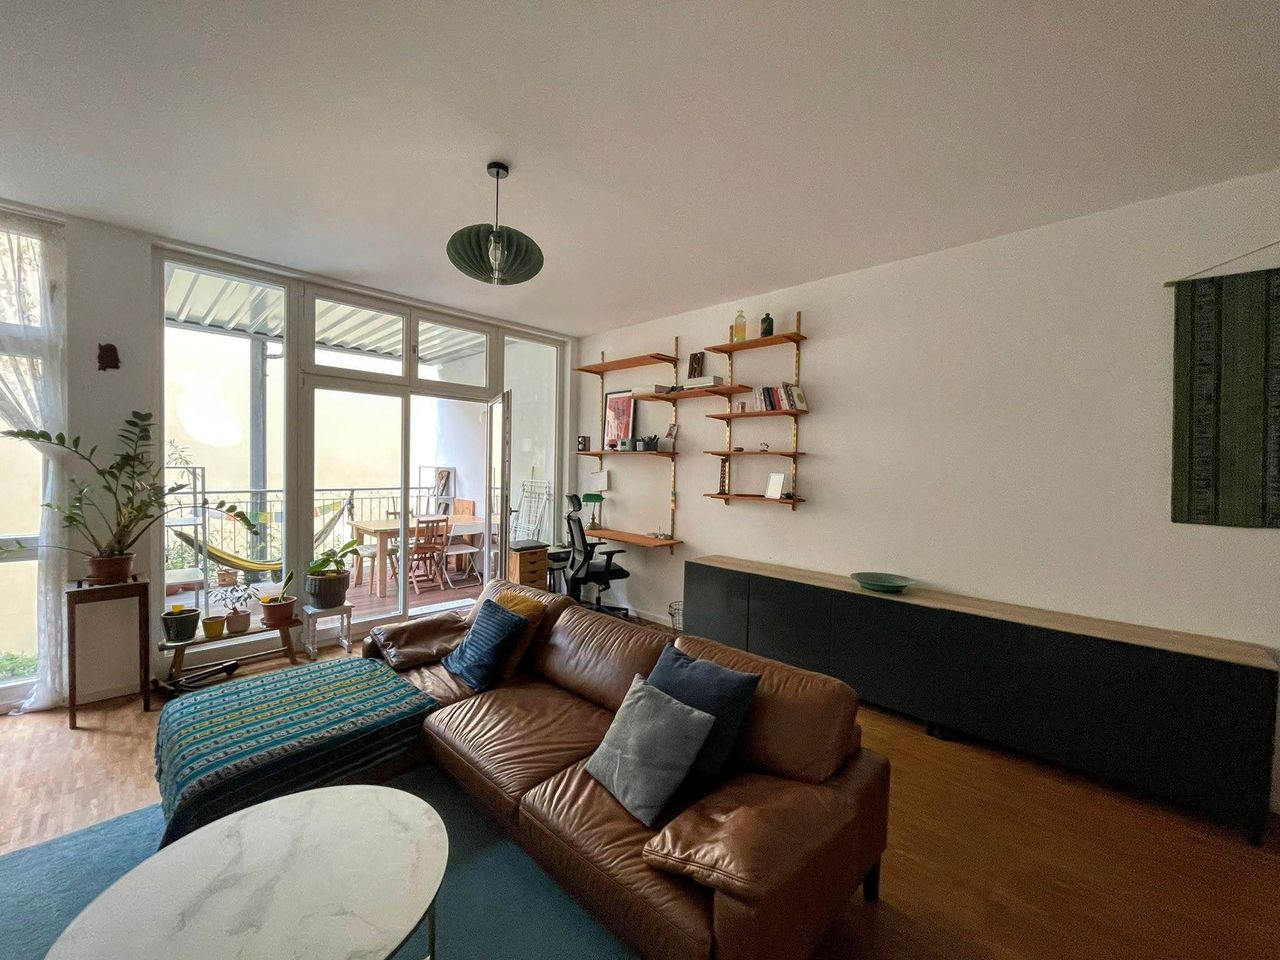 Family friendly apartment in Friedrichshain